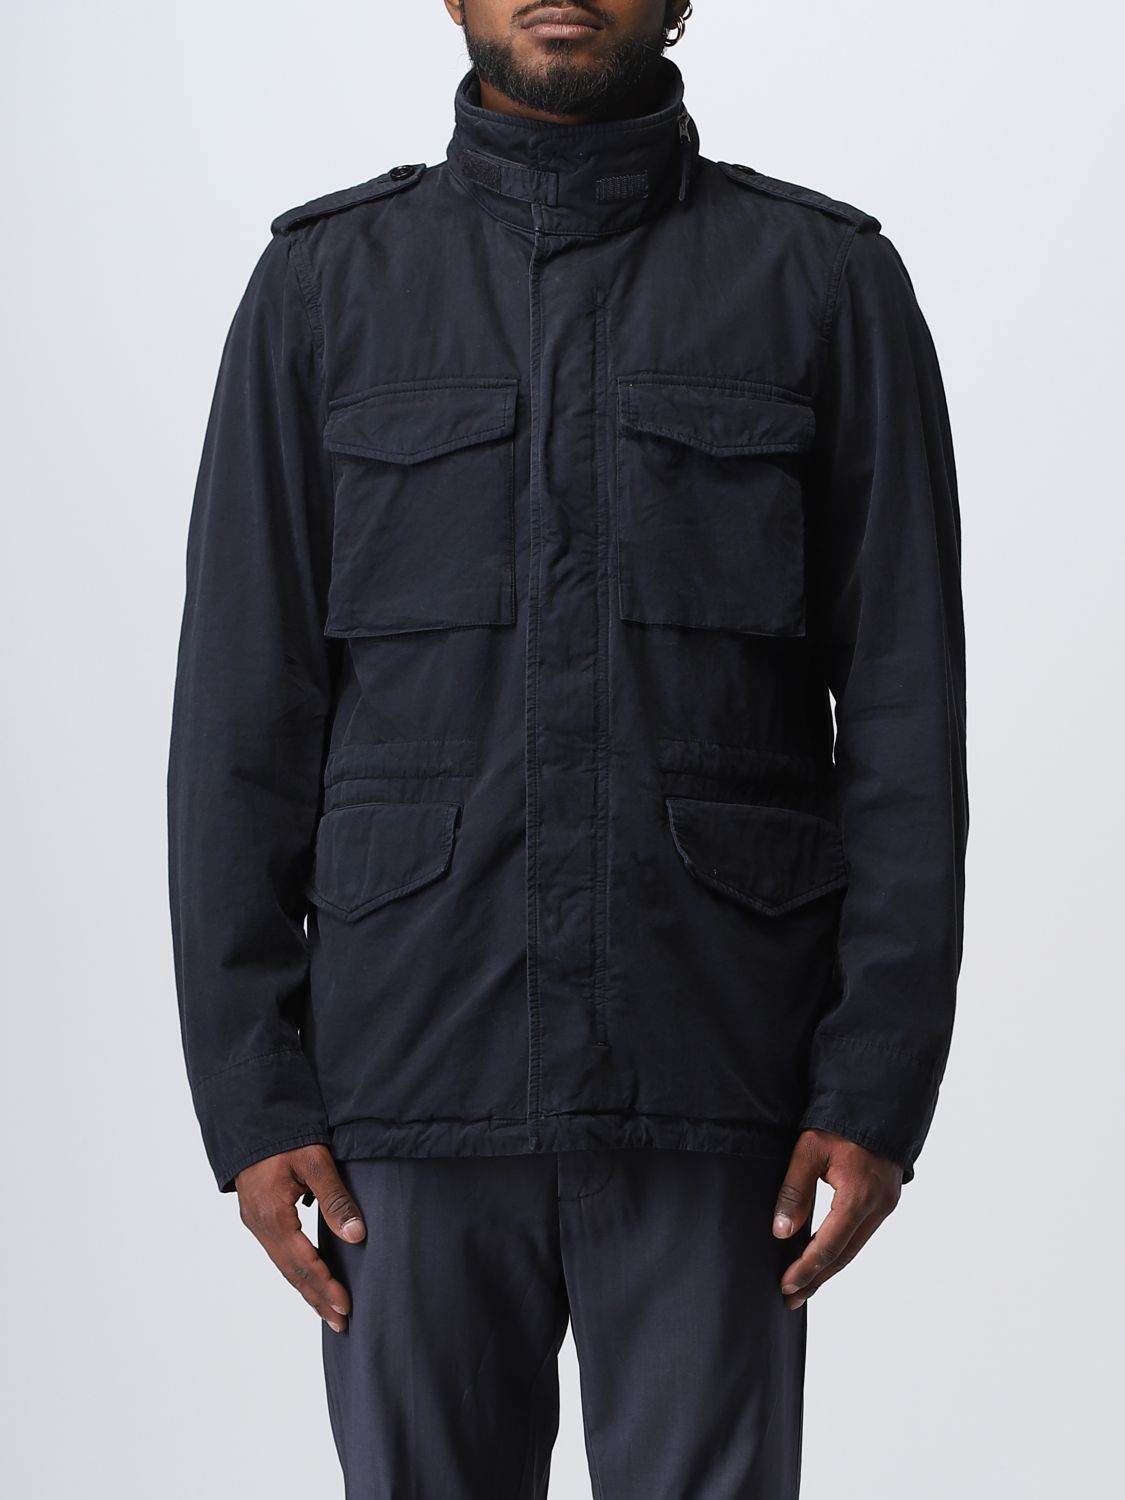 ASPESI: jacket for man - Navy | Aspesi jacket CG20A262 online on GIGLIO.COM